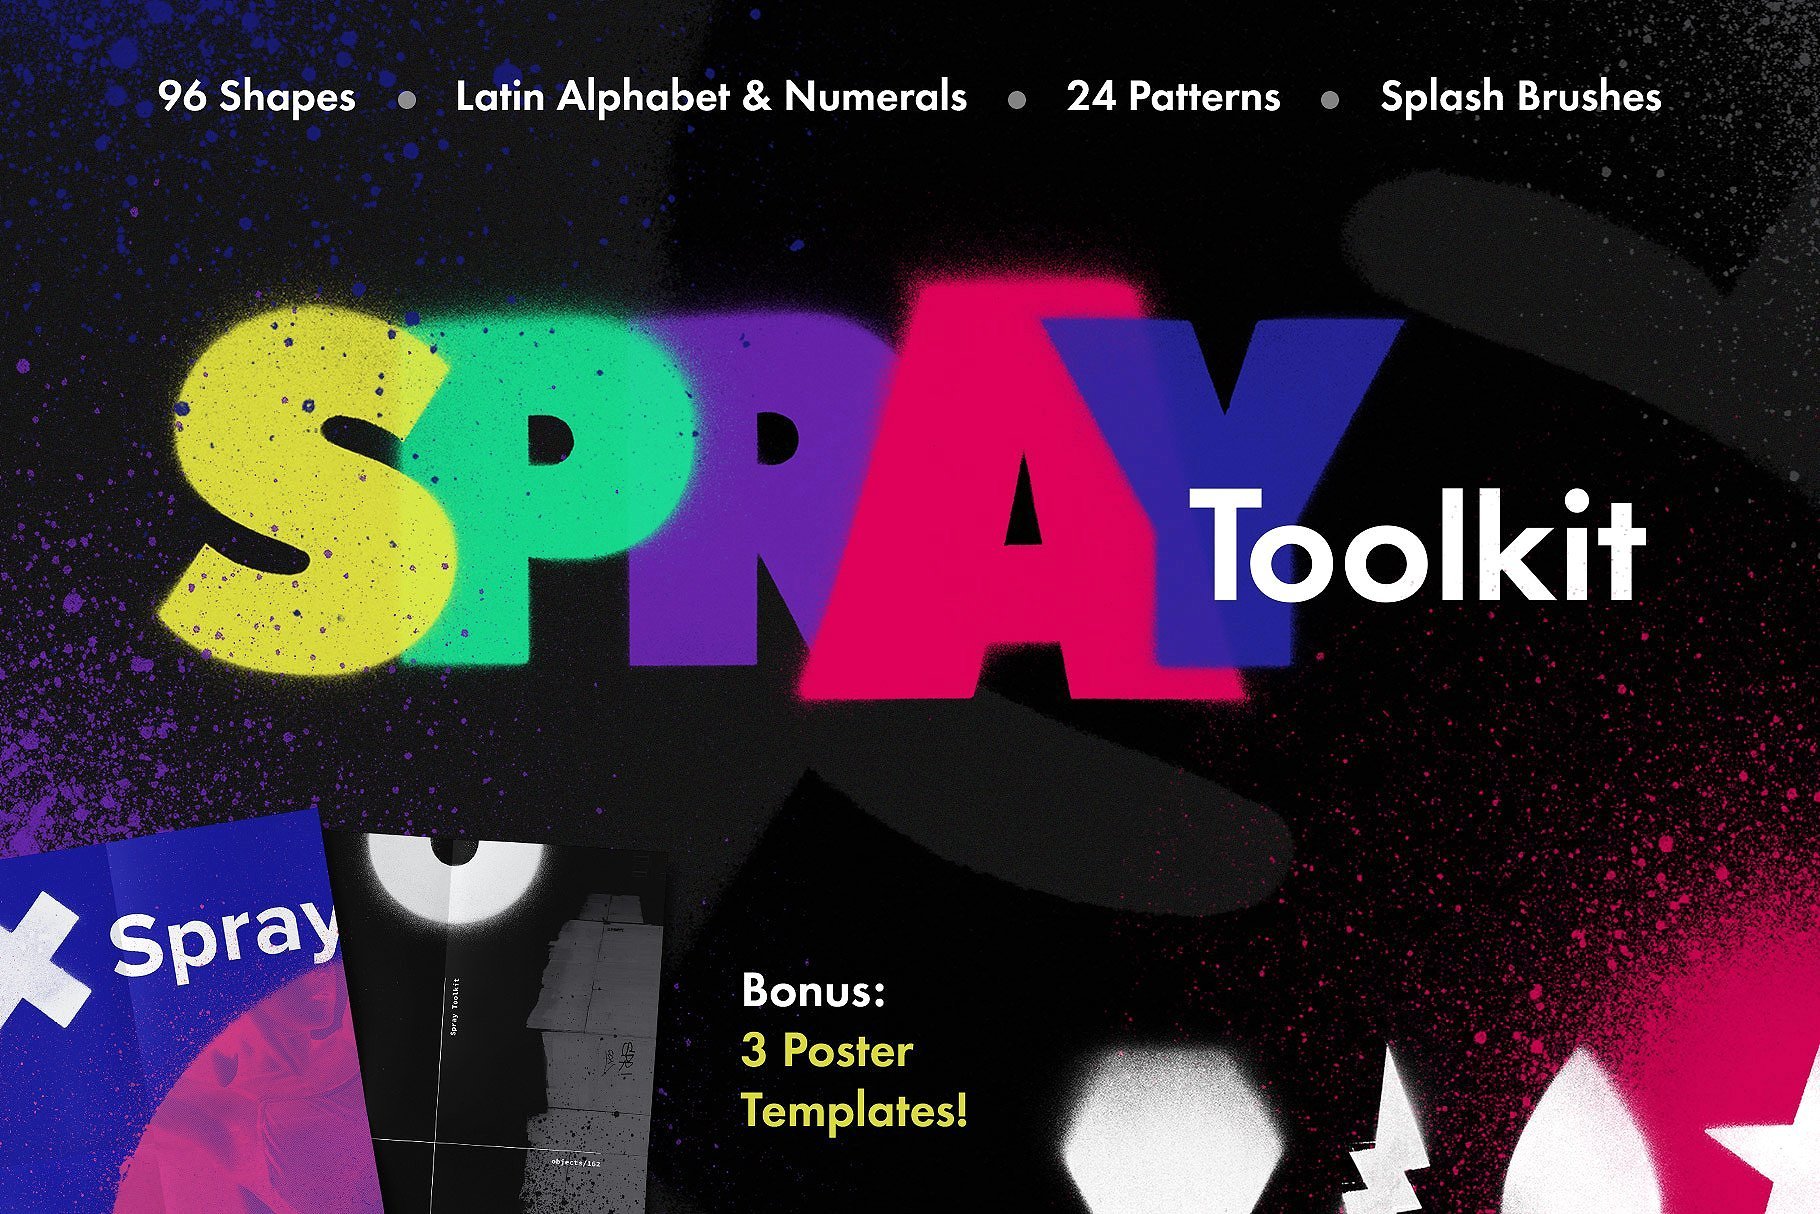 Spray Art Painter’s Toolkitcover image.